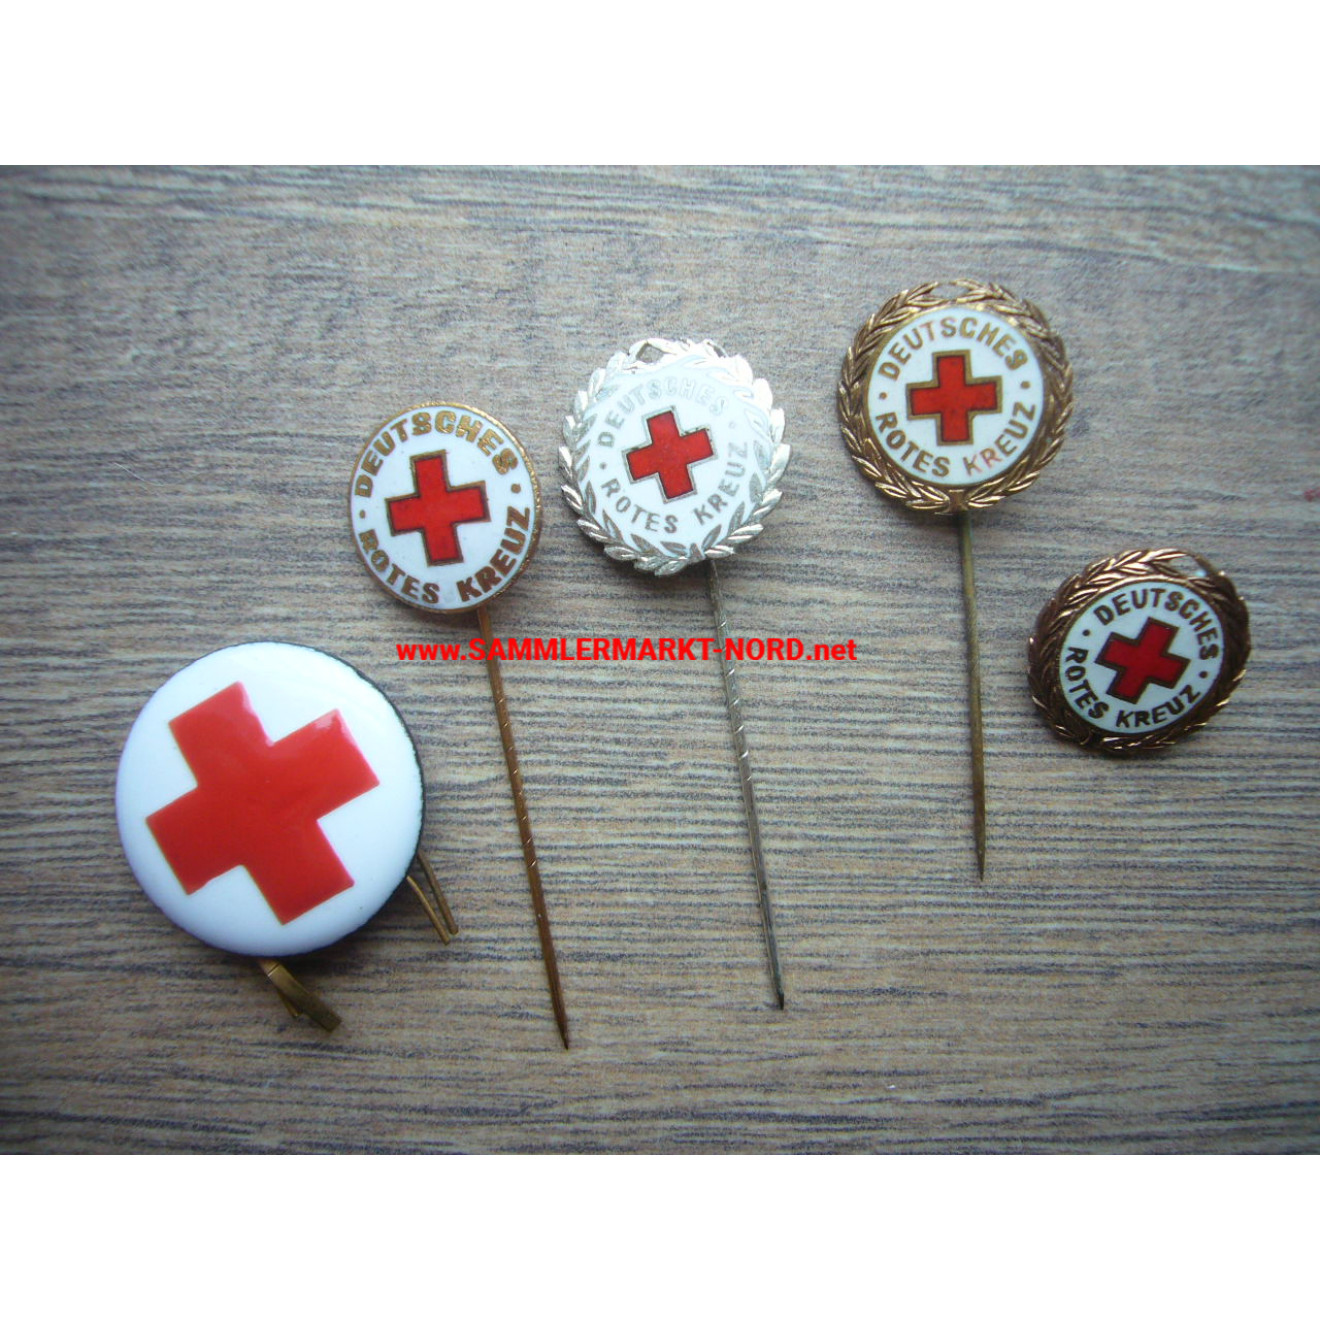 DRK German Red Cross - various badges of honour & cap badge